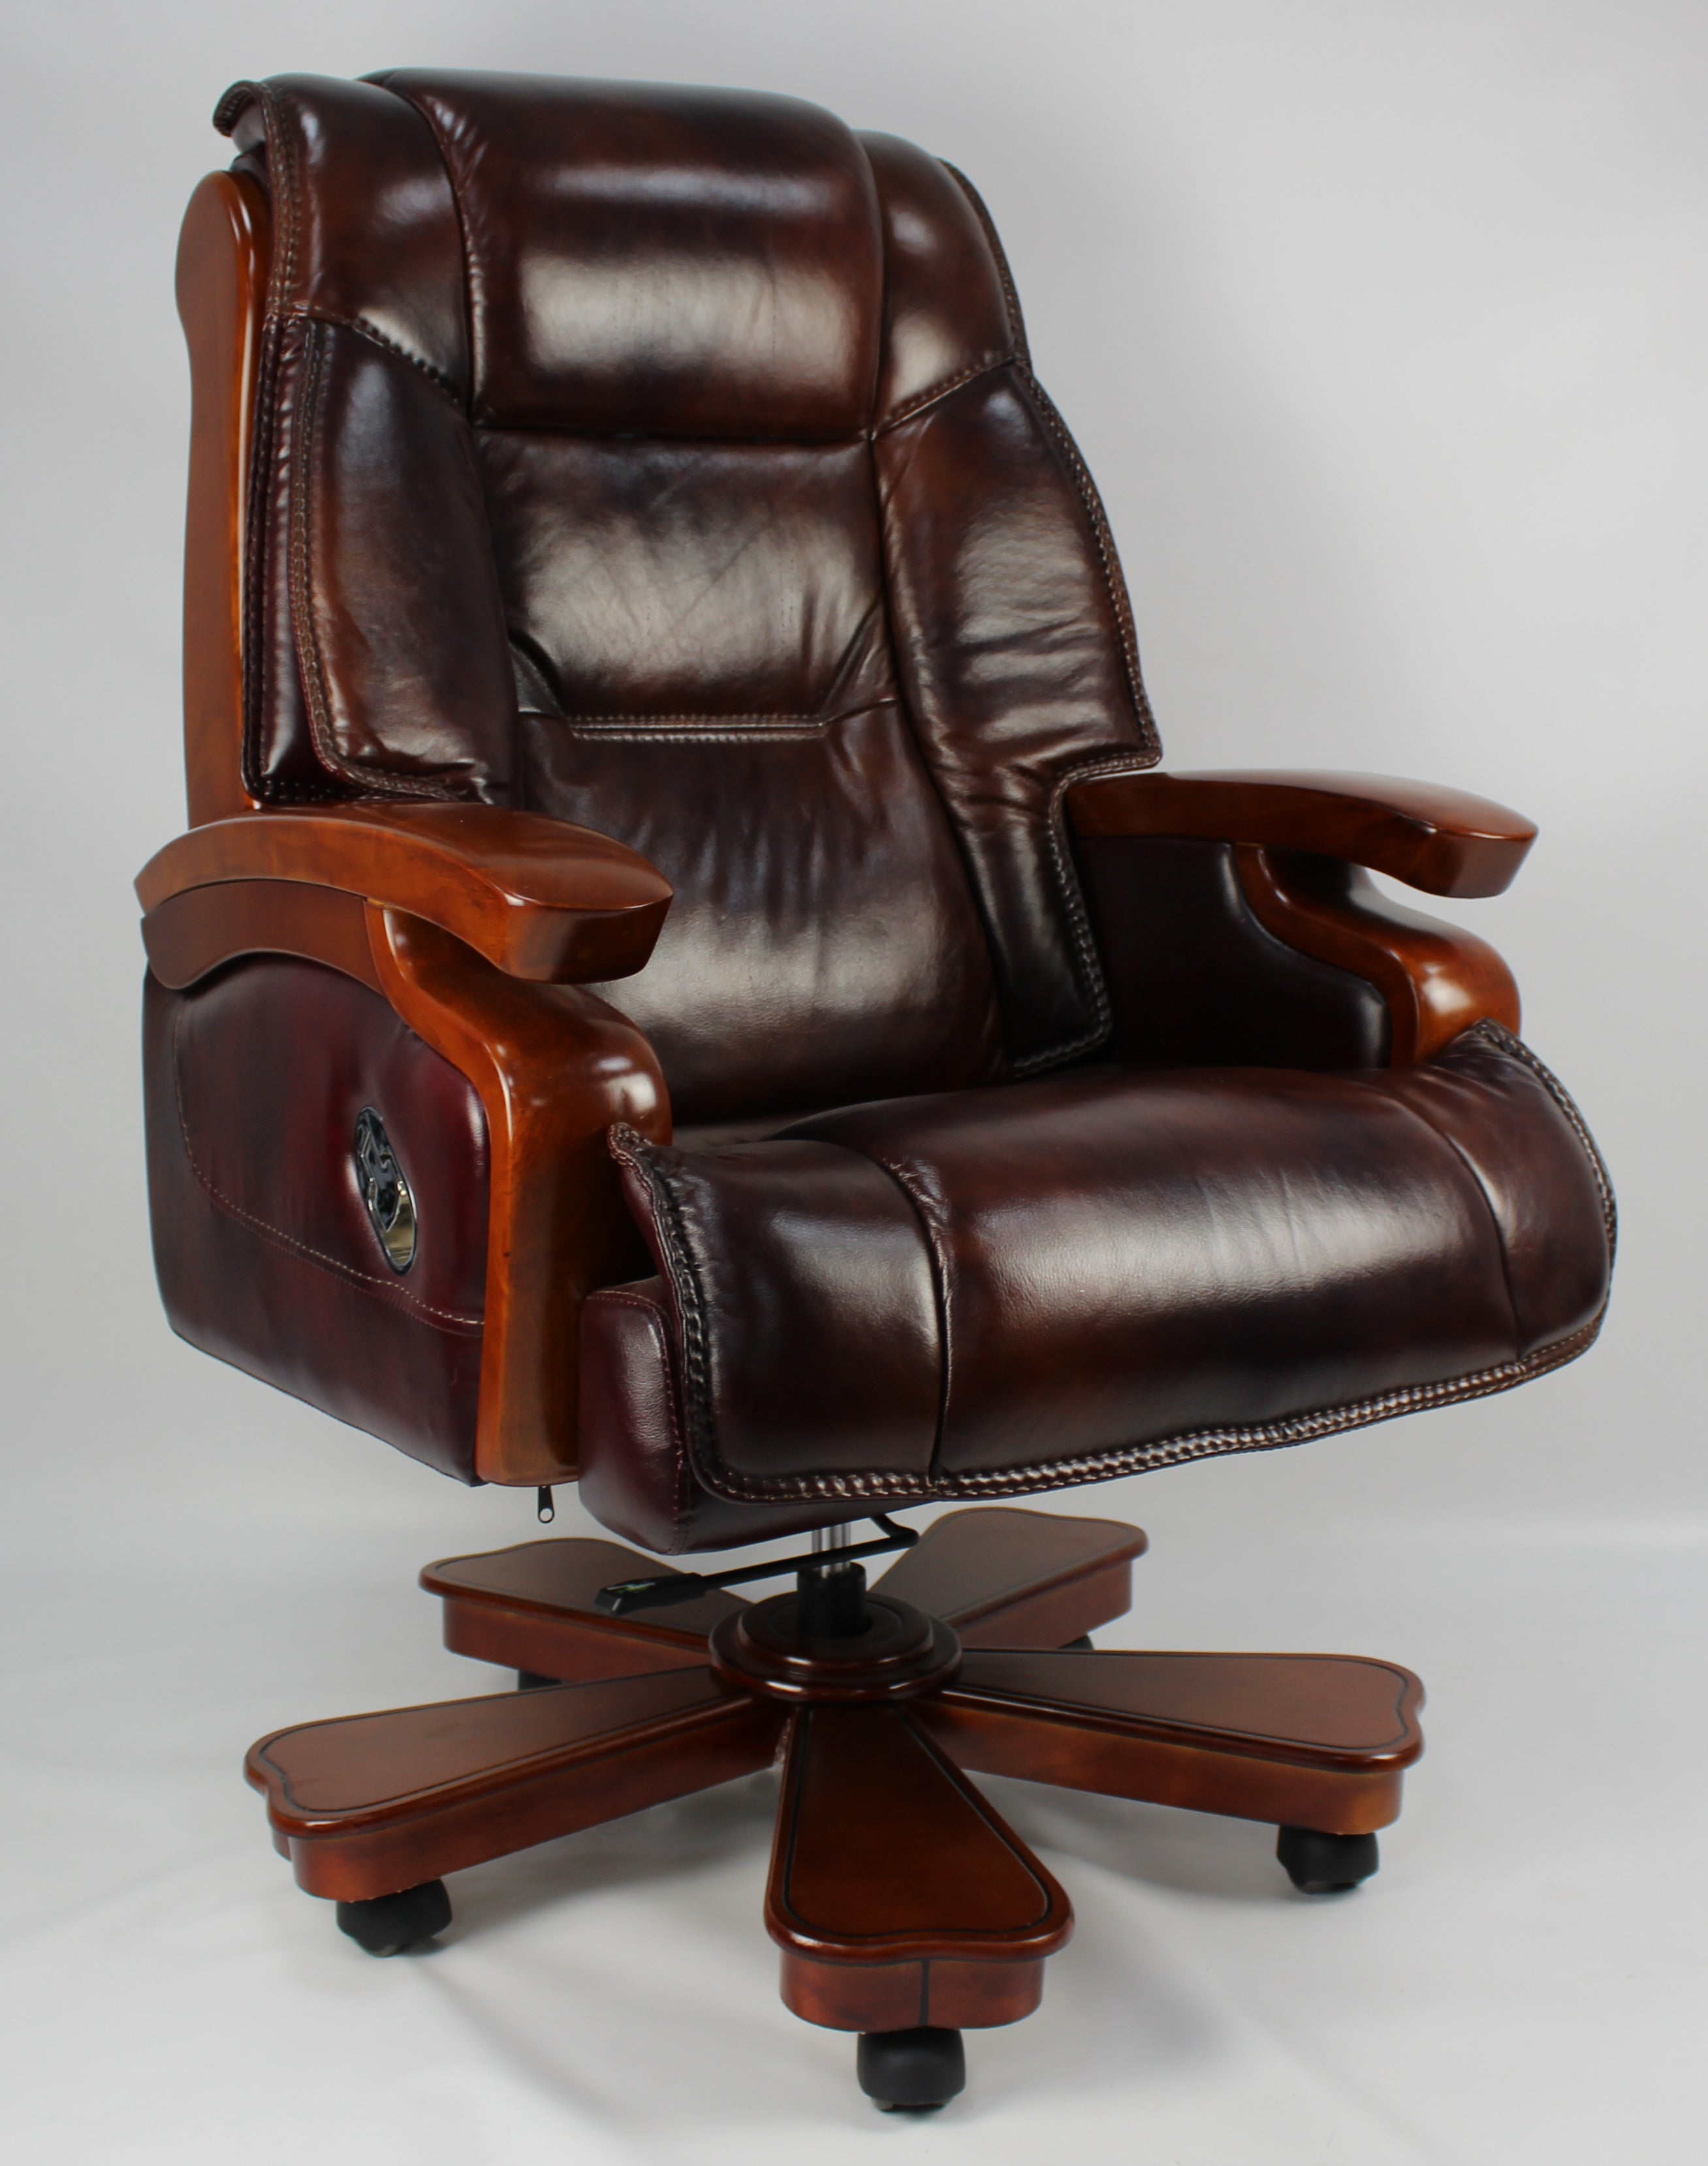 Real Italian Leather Burgundy Executive Office Chair - A771